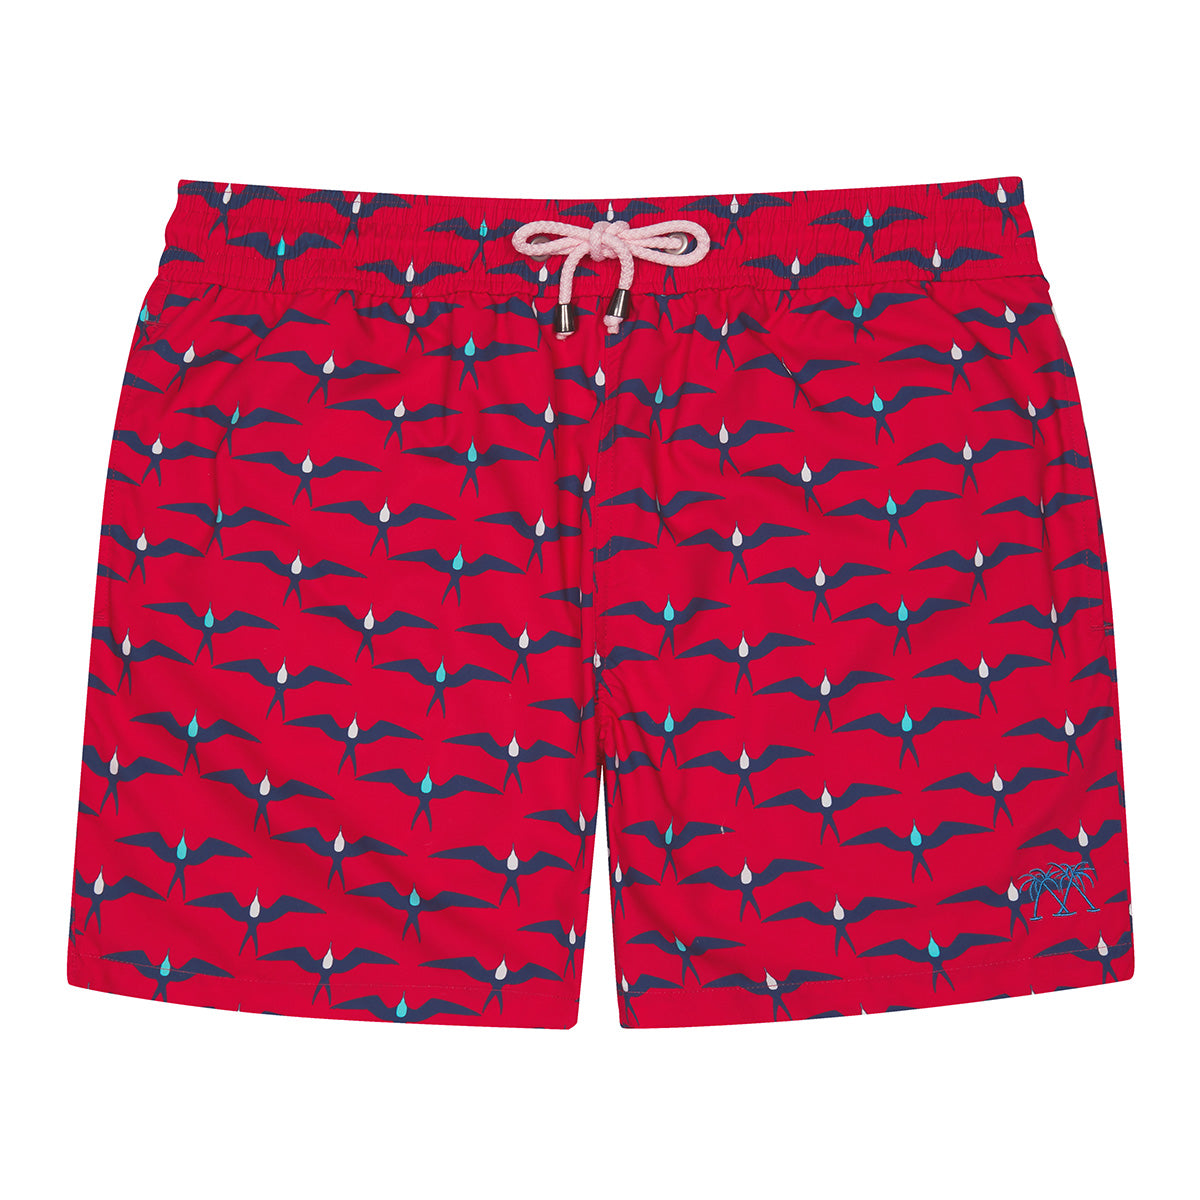 Mens swim shorts: FRIGATE BIRD - RED